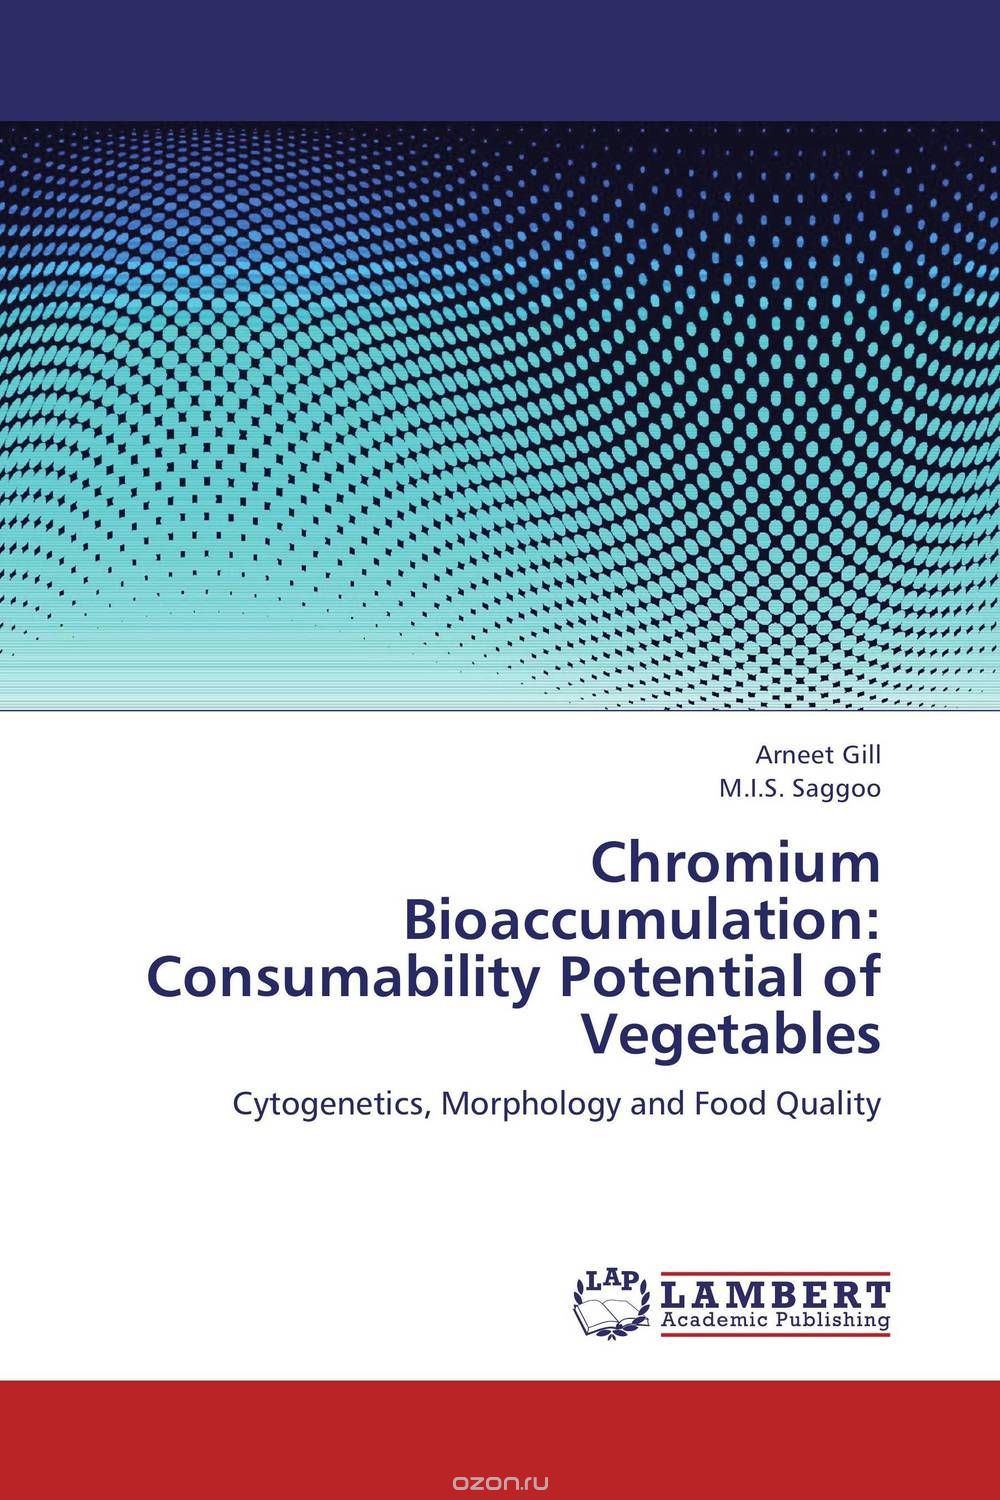 Скачать книгу "Chromium Bioaccumulation: Consumability Potential of Vegetables"